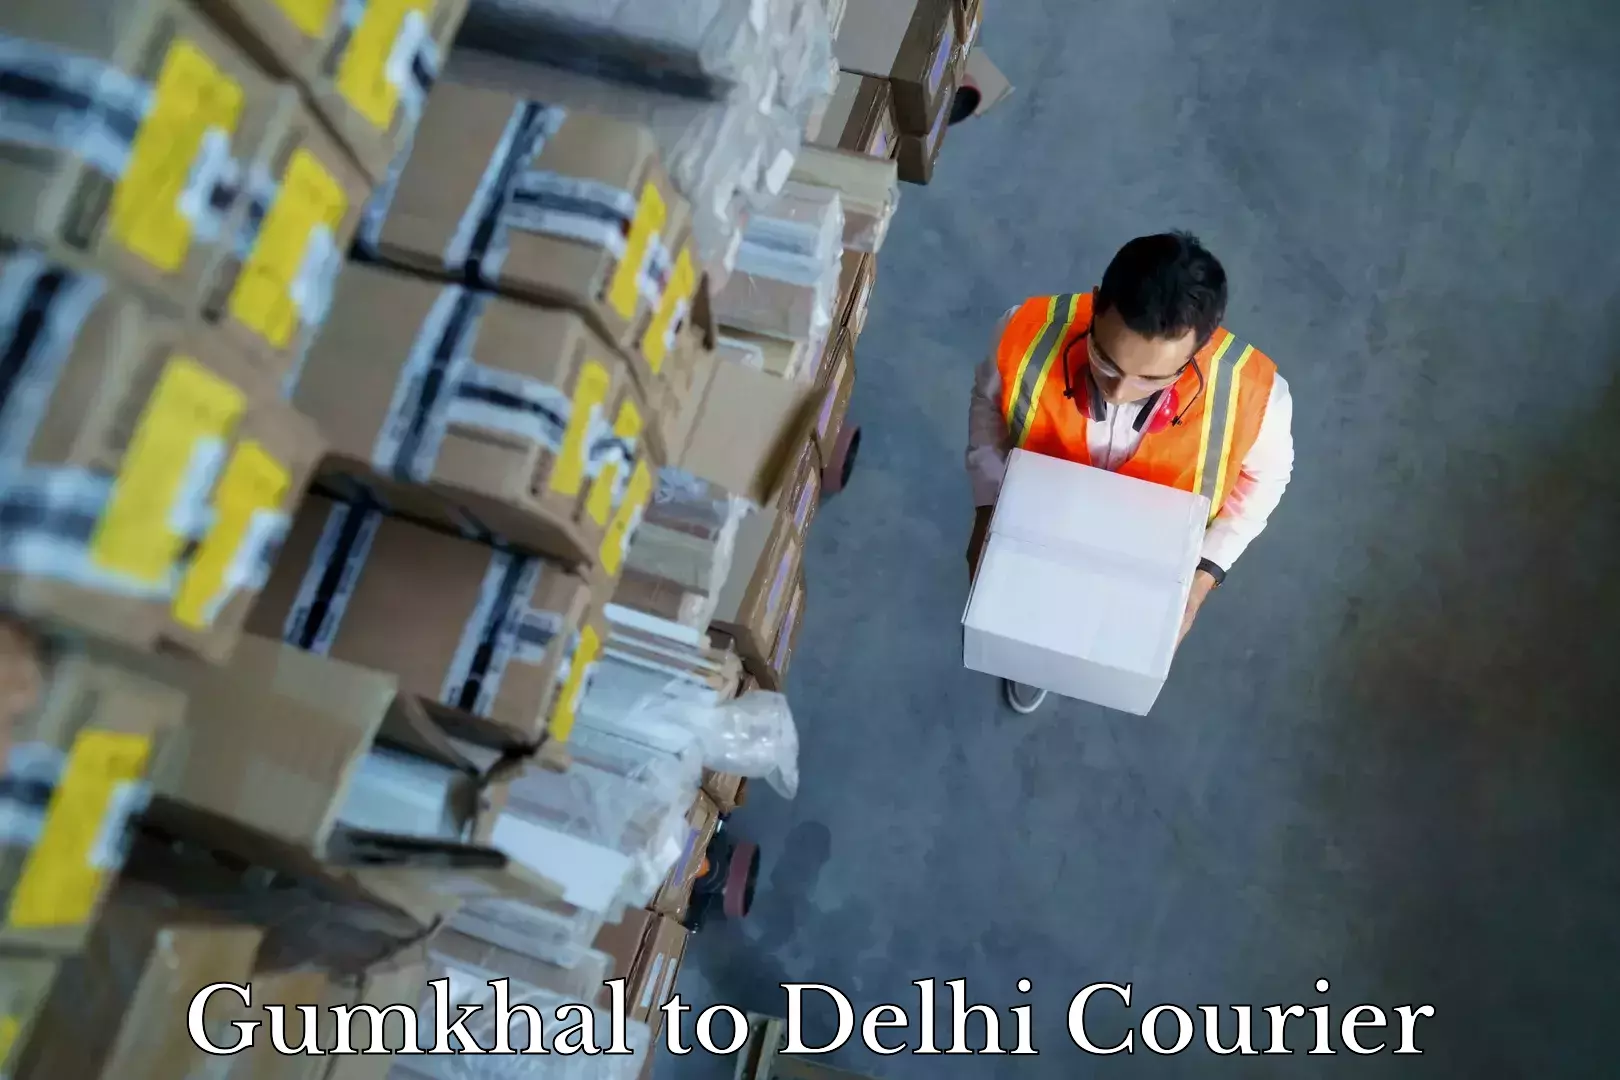 Furniture relocation experts Gumkhal to Delhi